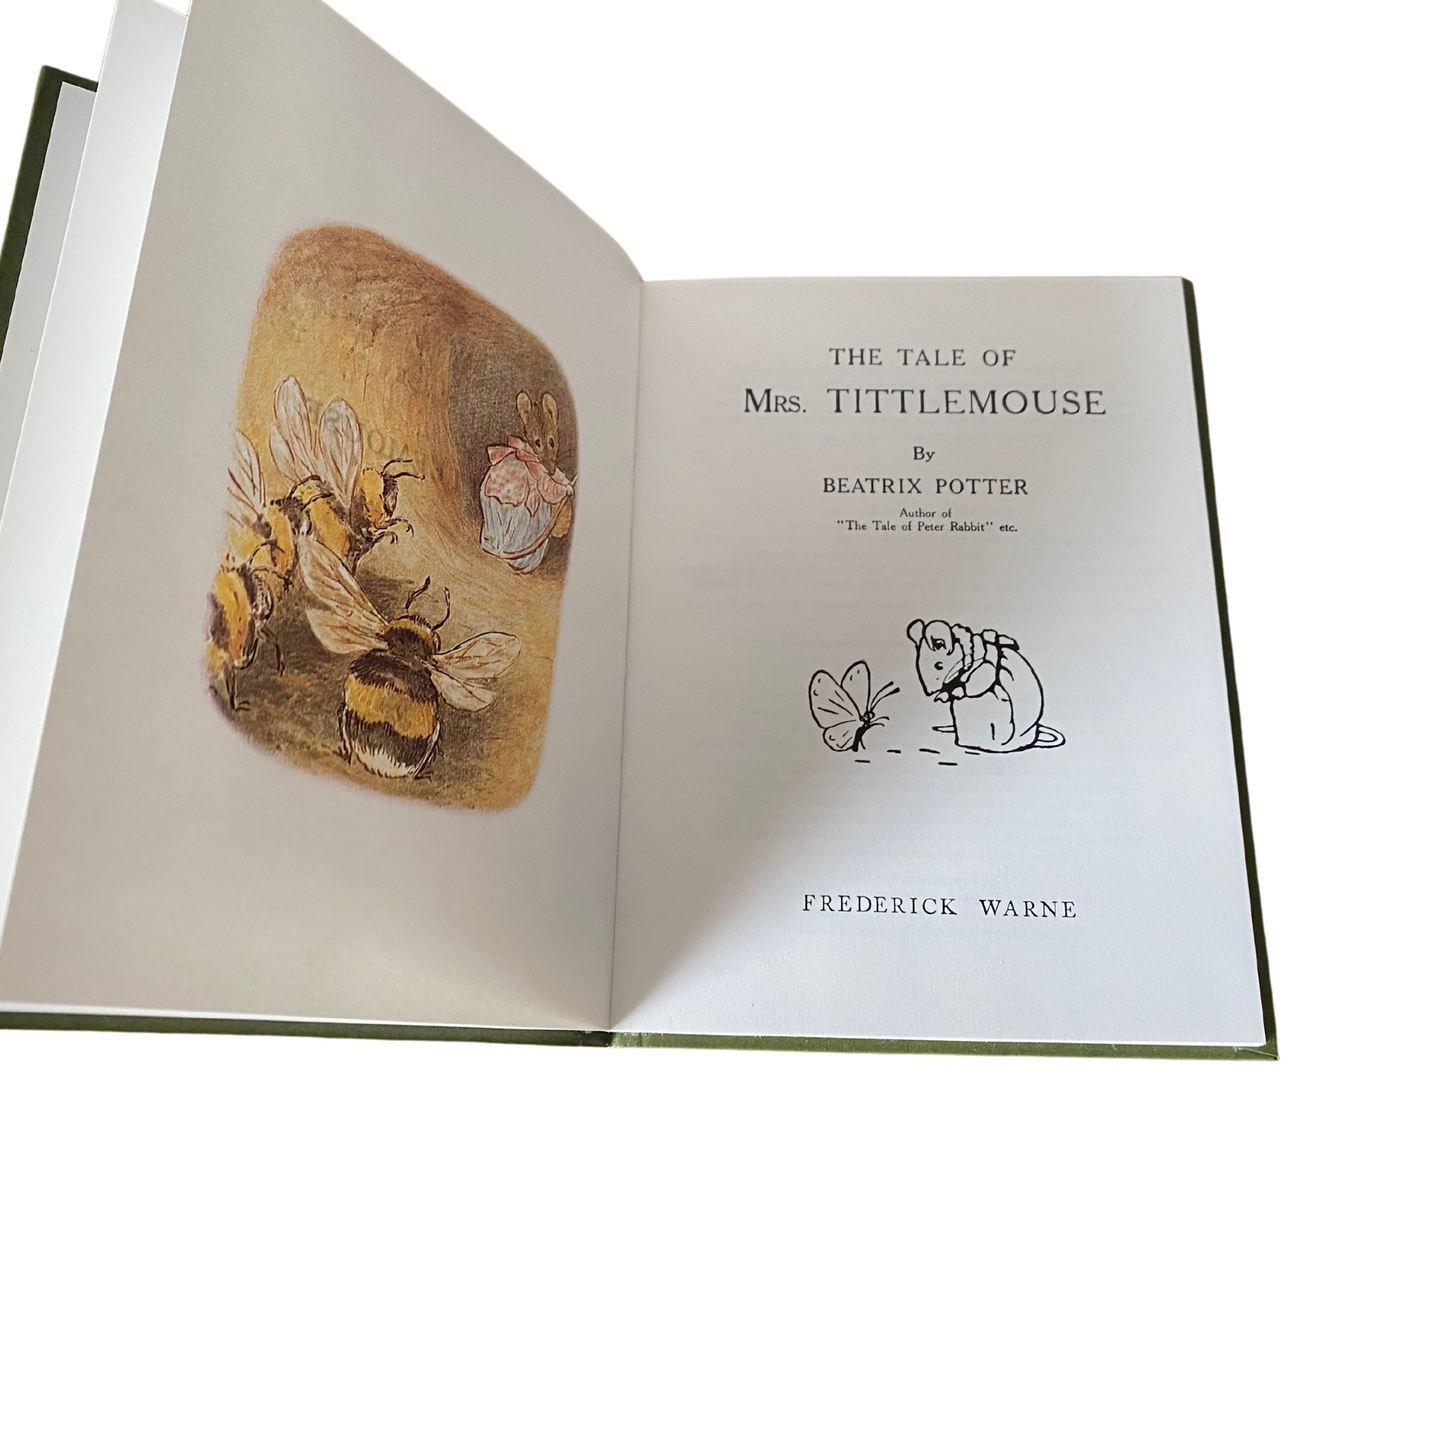 The Tale of Mrs. Tittlemouse. Vintage Beatrix Potter book. 1989 impression.